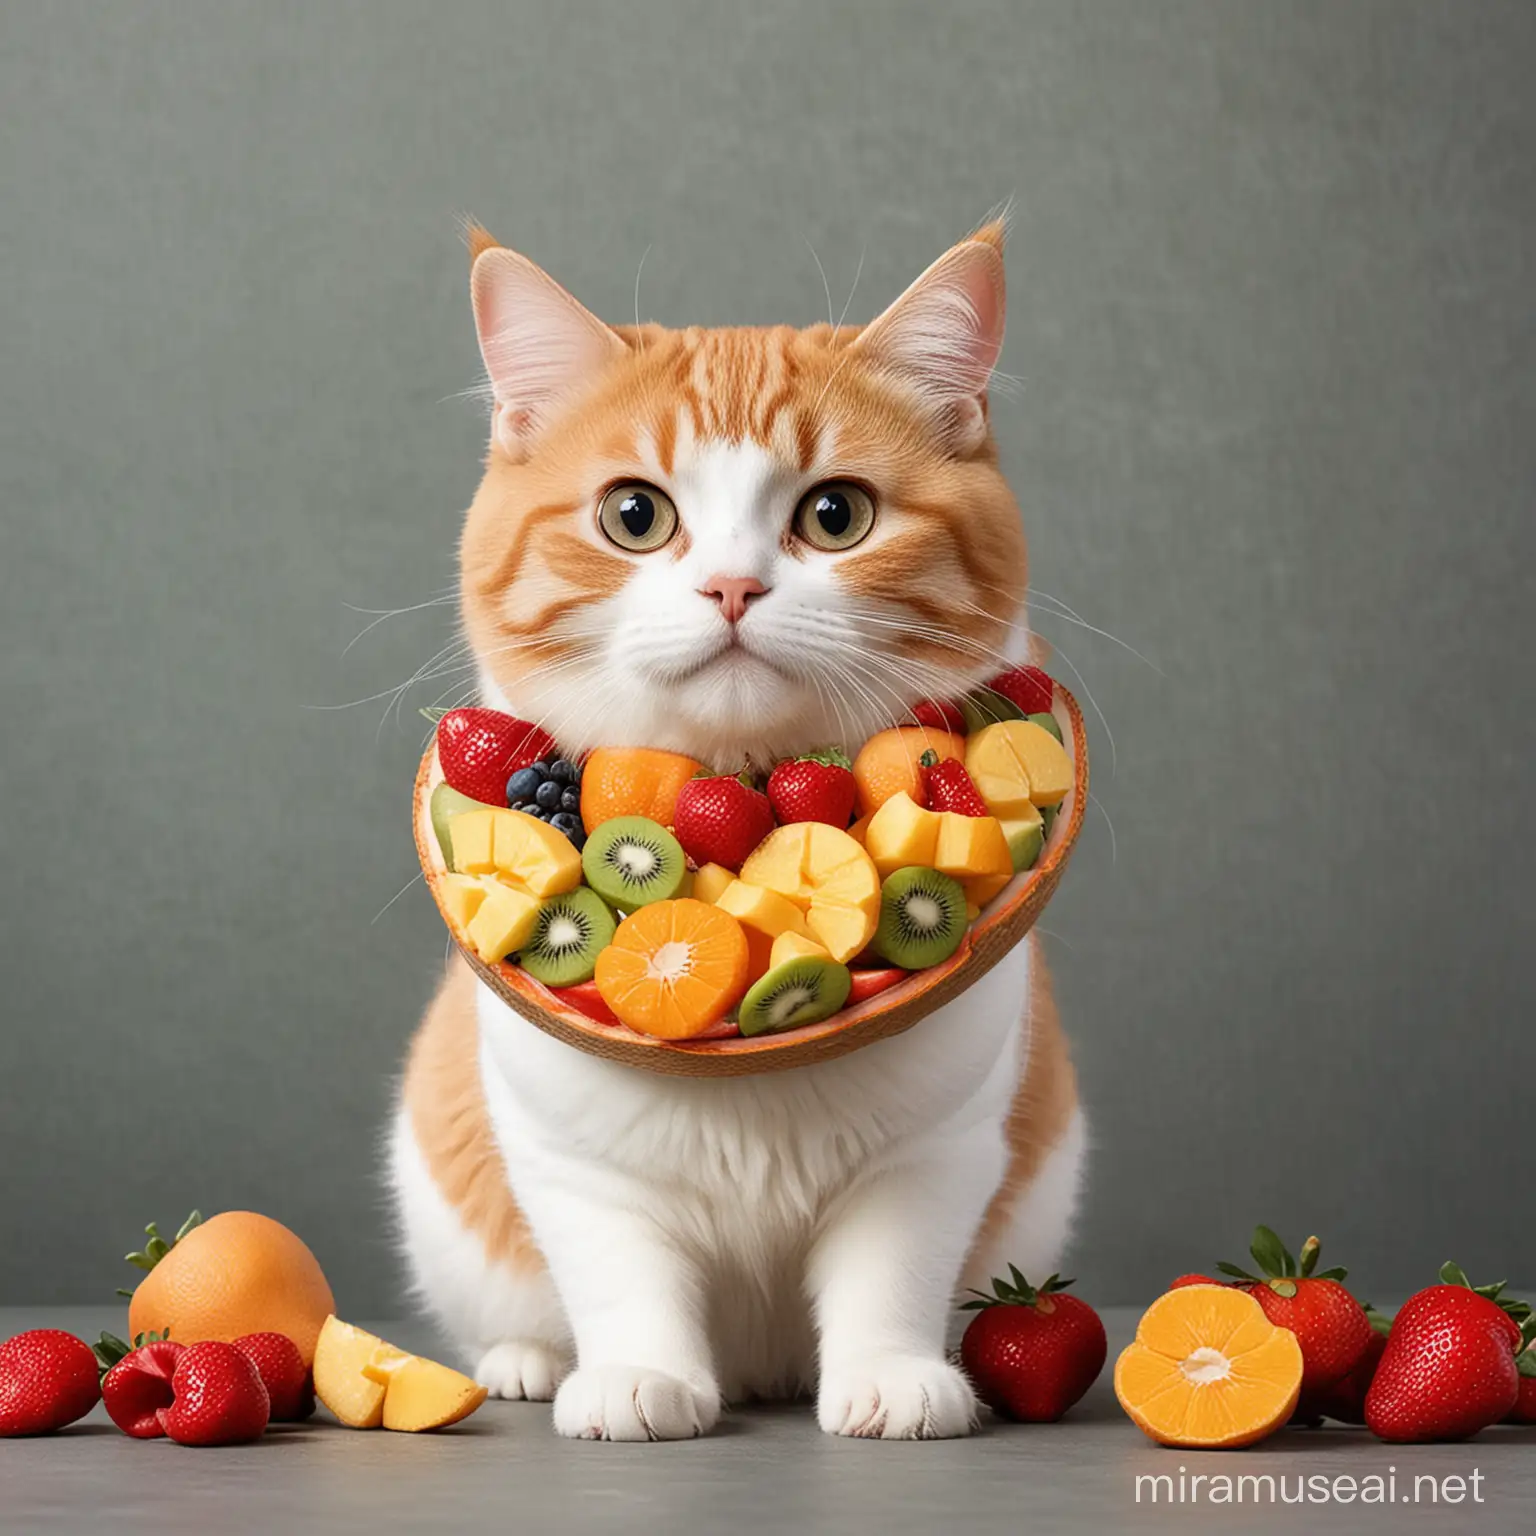 Fruity cat